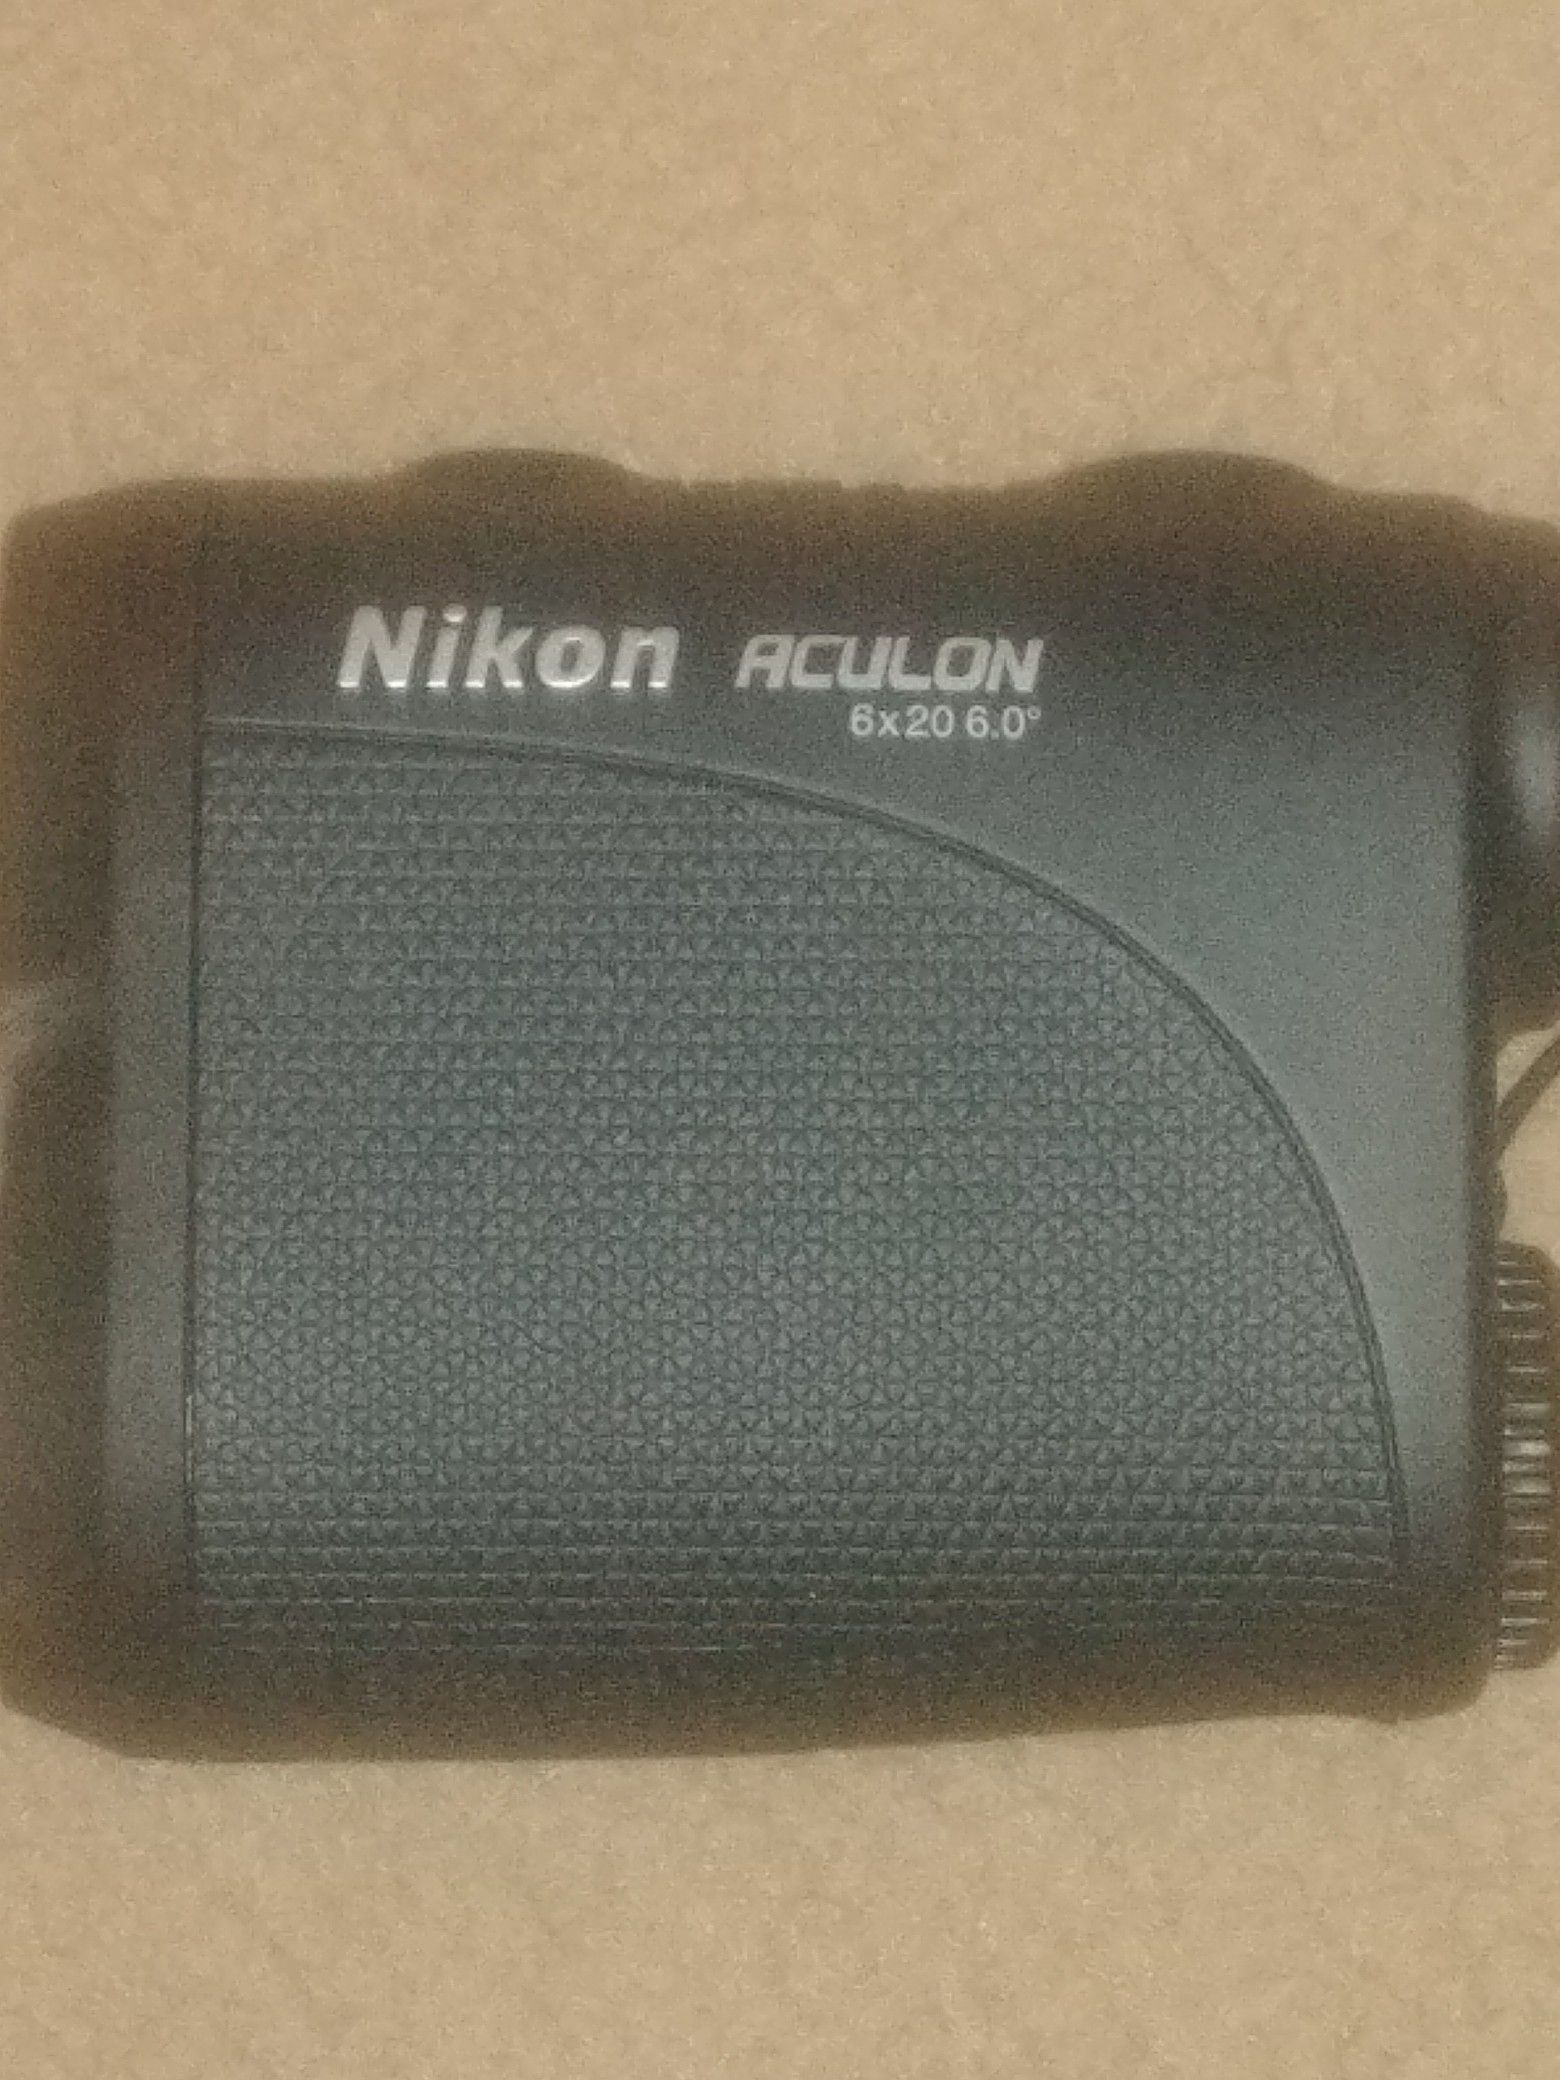 Nikon ACULON 6×20 6.0°